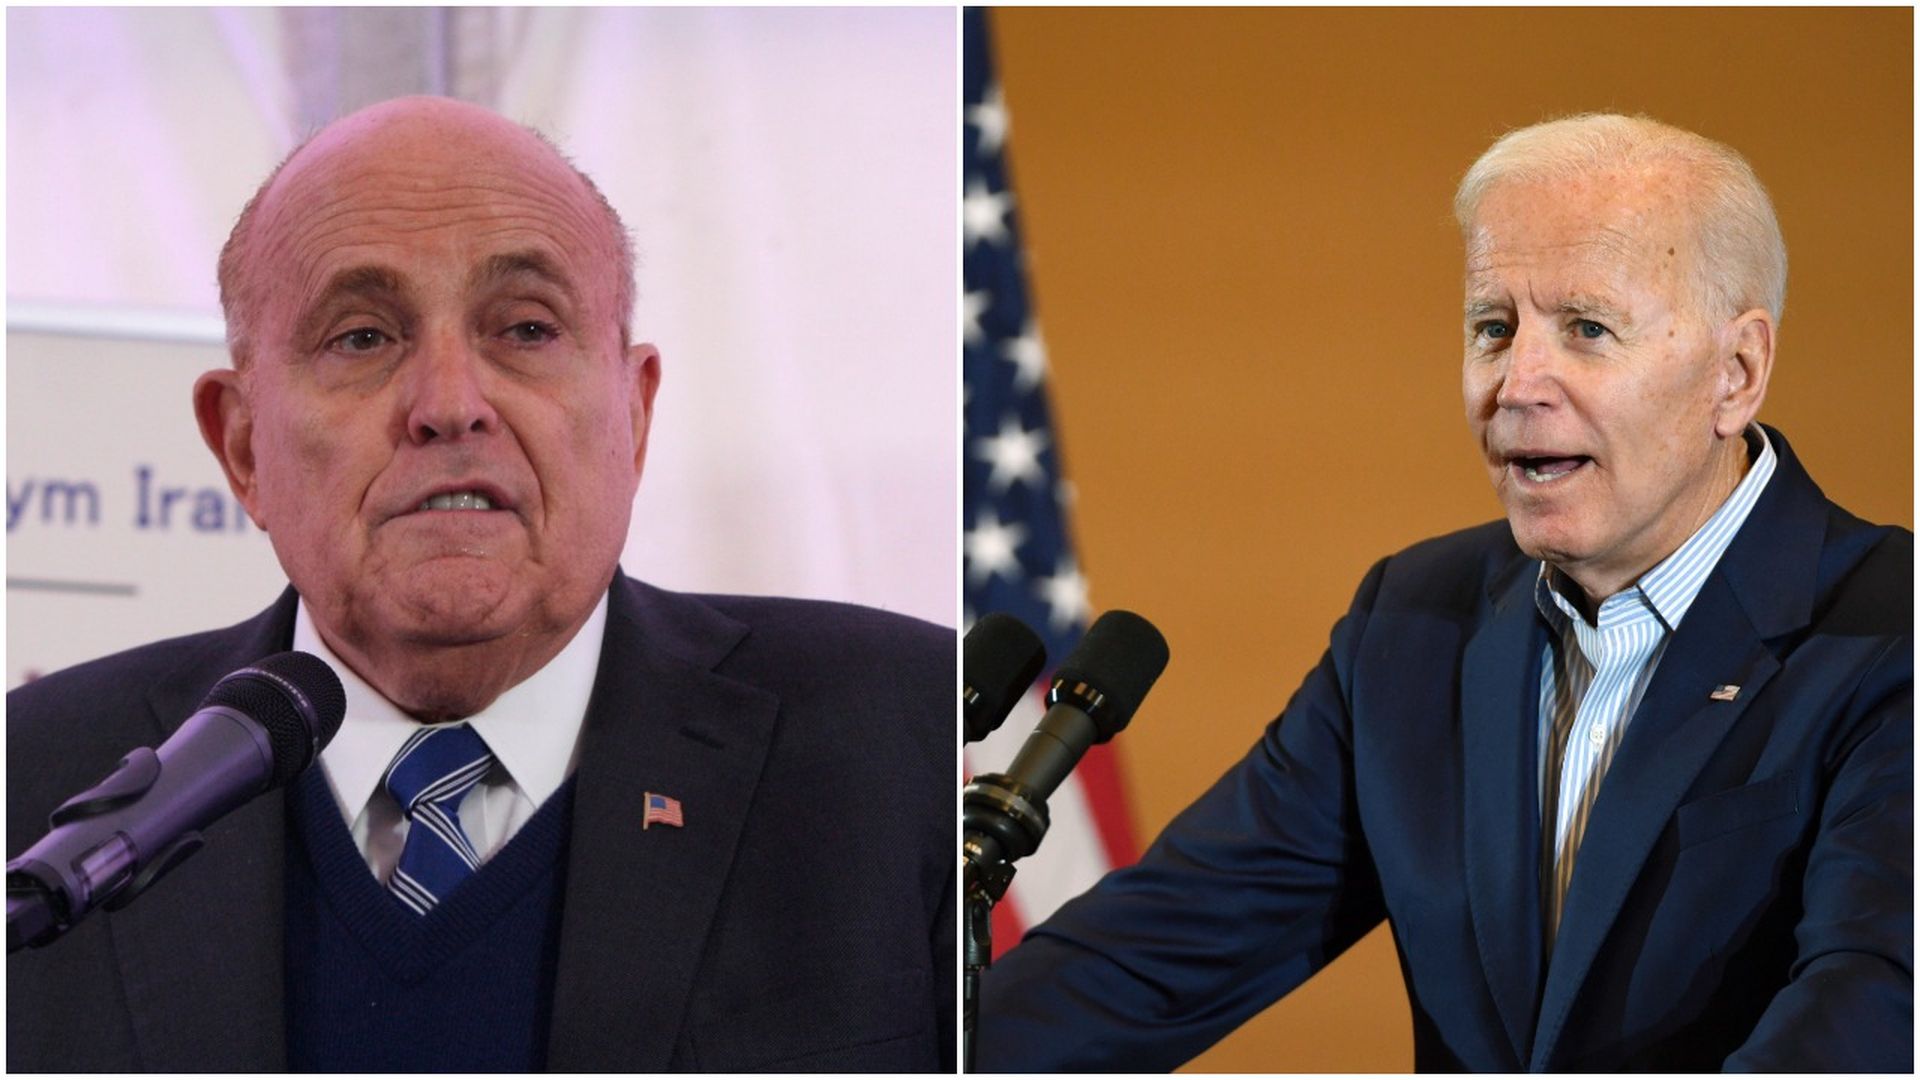 This image is a split screen between Giuliani and Biden.